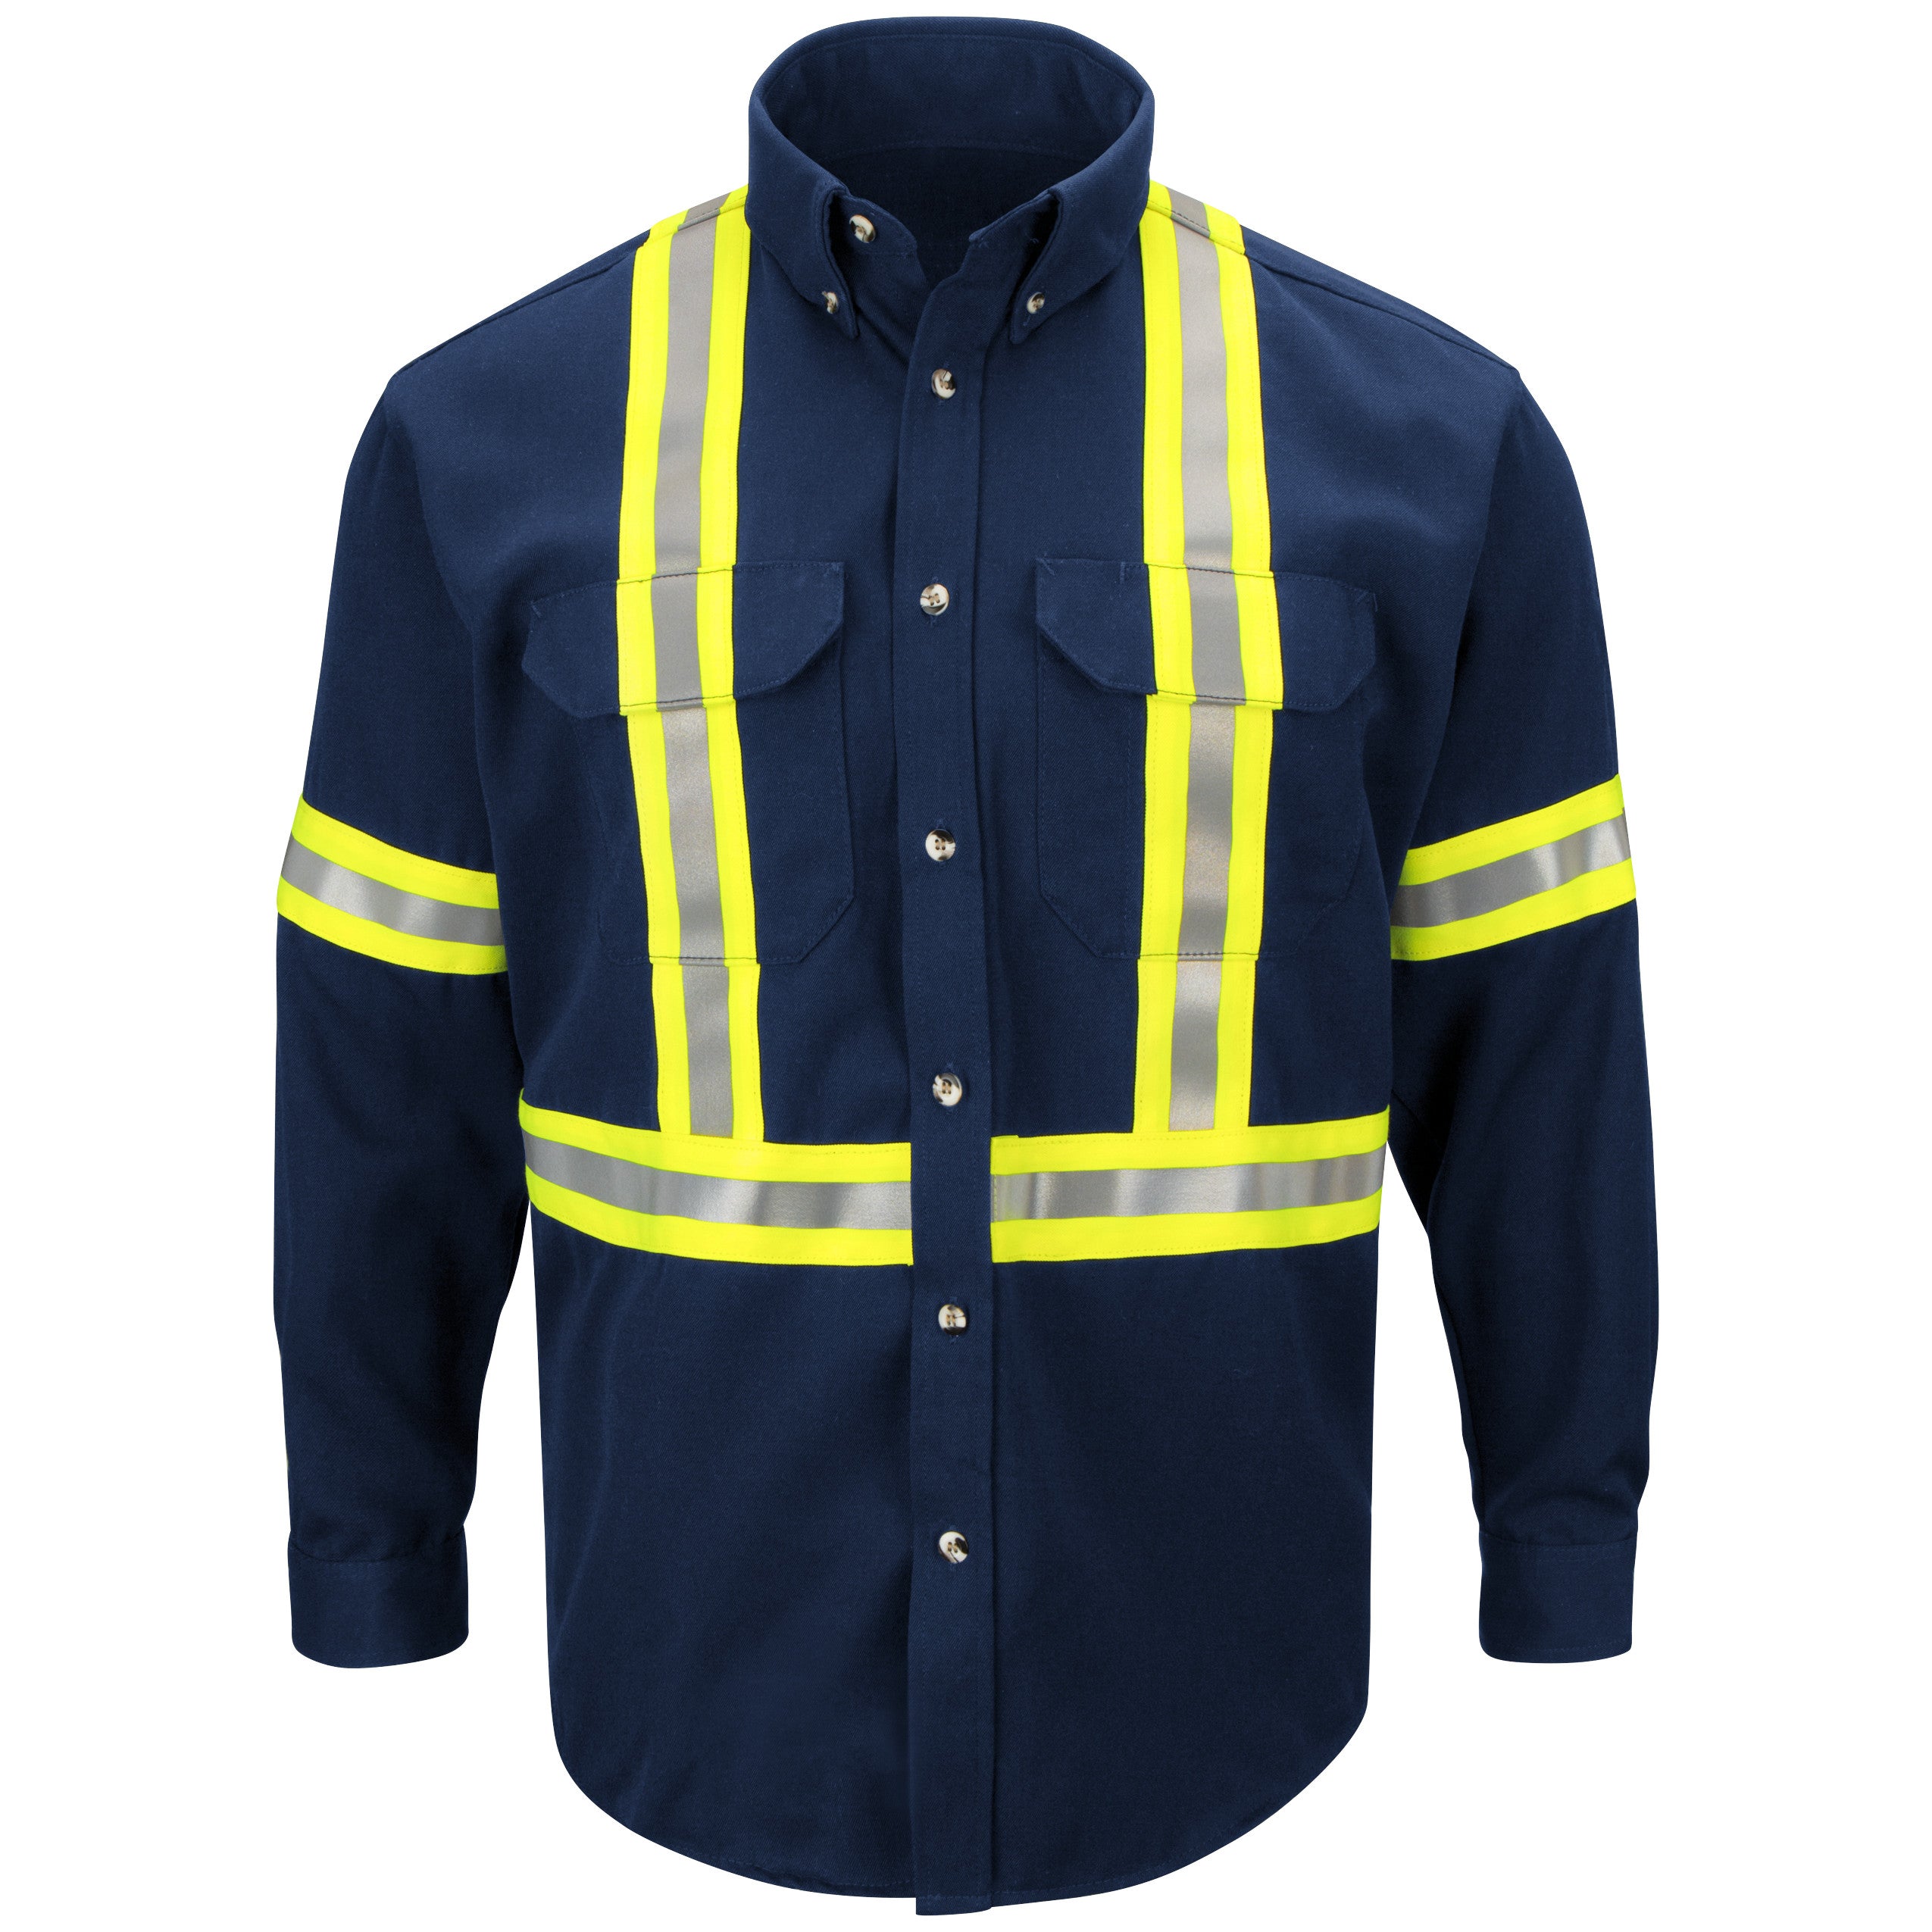 Men's Dress Uniform Shirt with Reflective Trim SMUC - Navy-eSafety Supplies, Inc